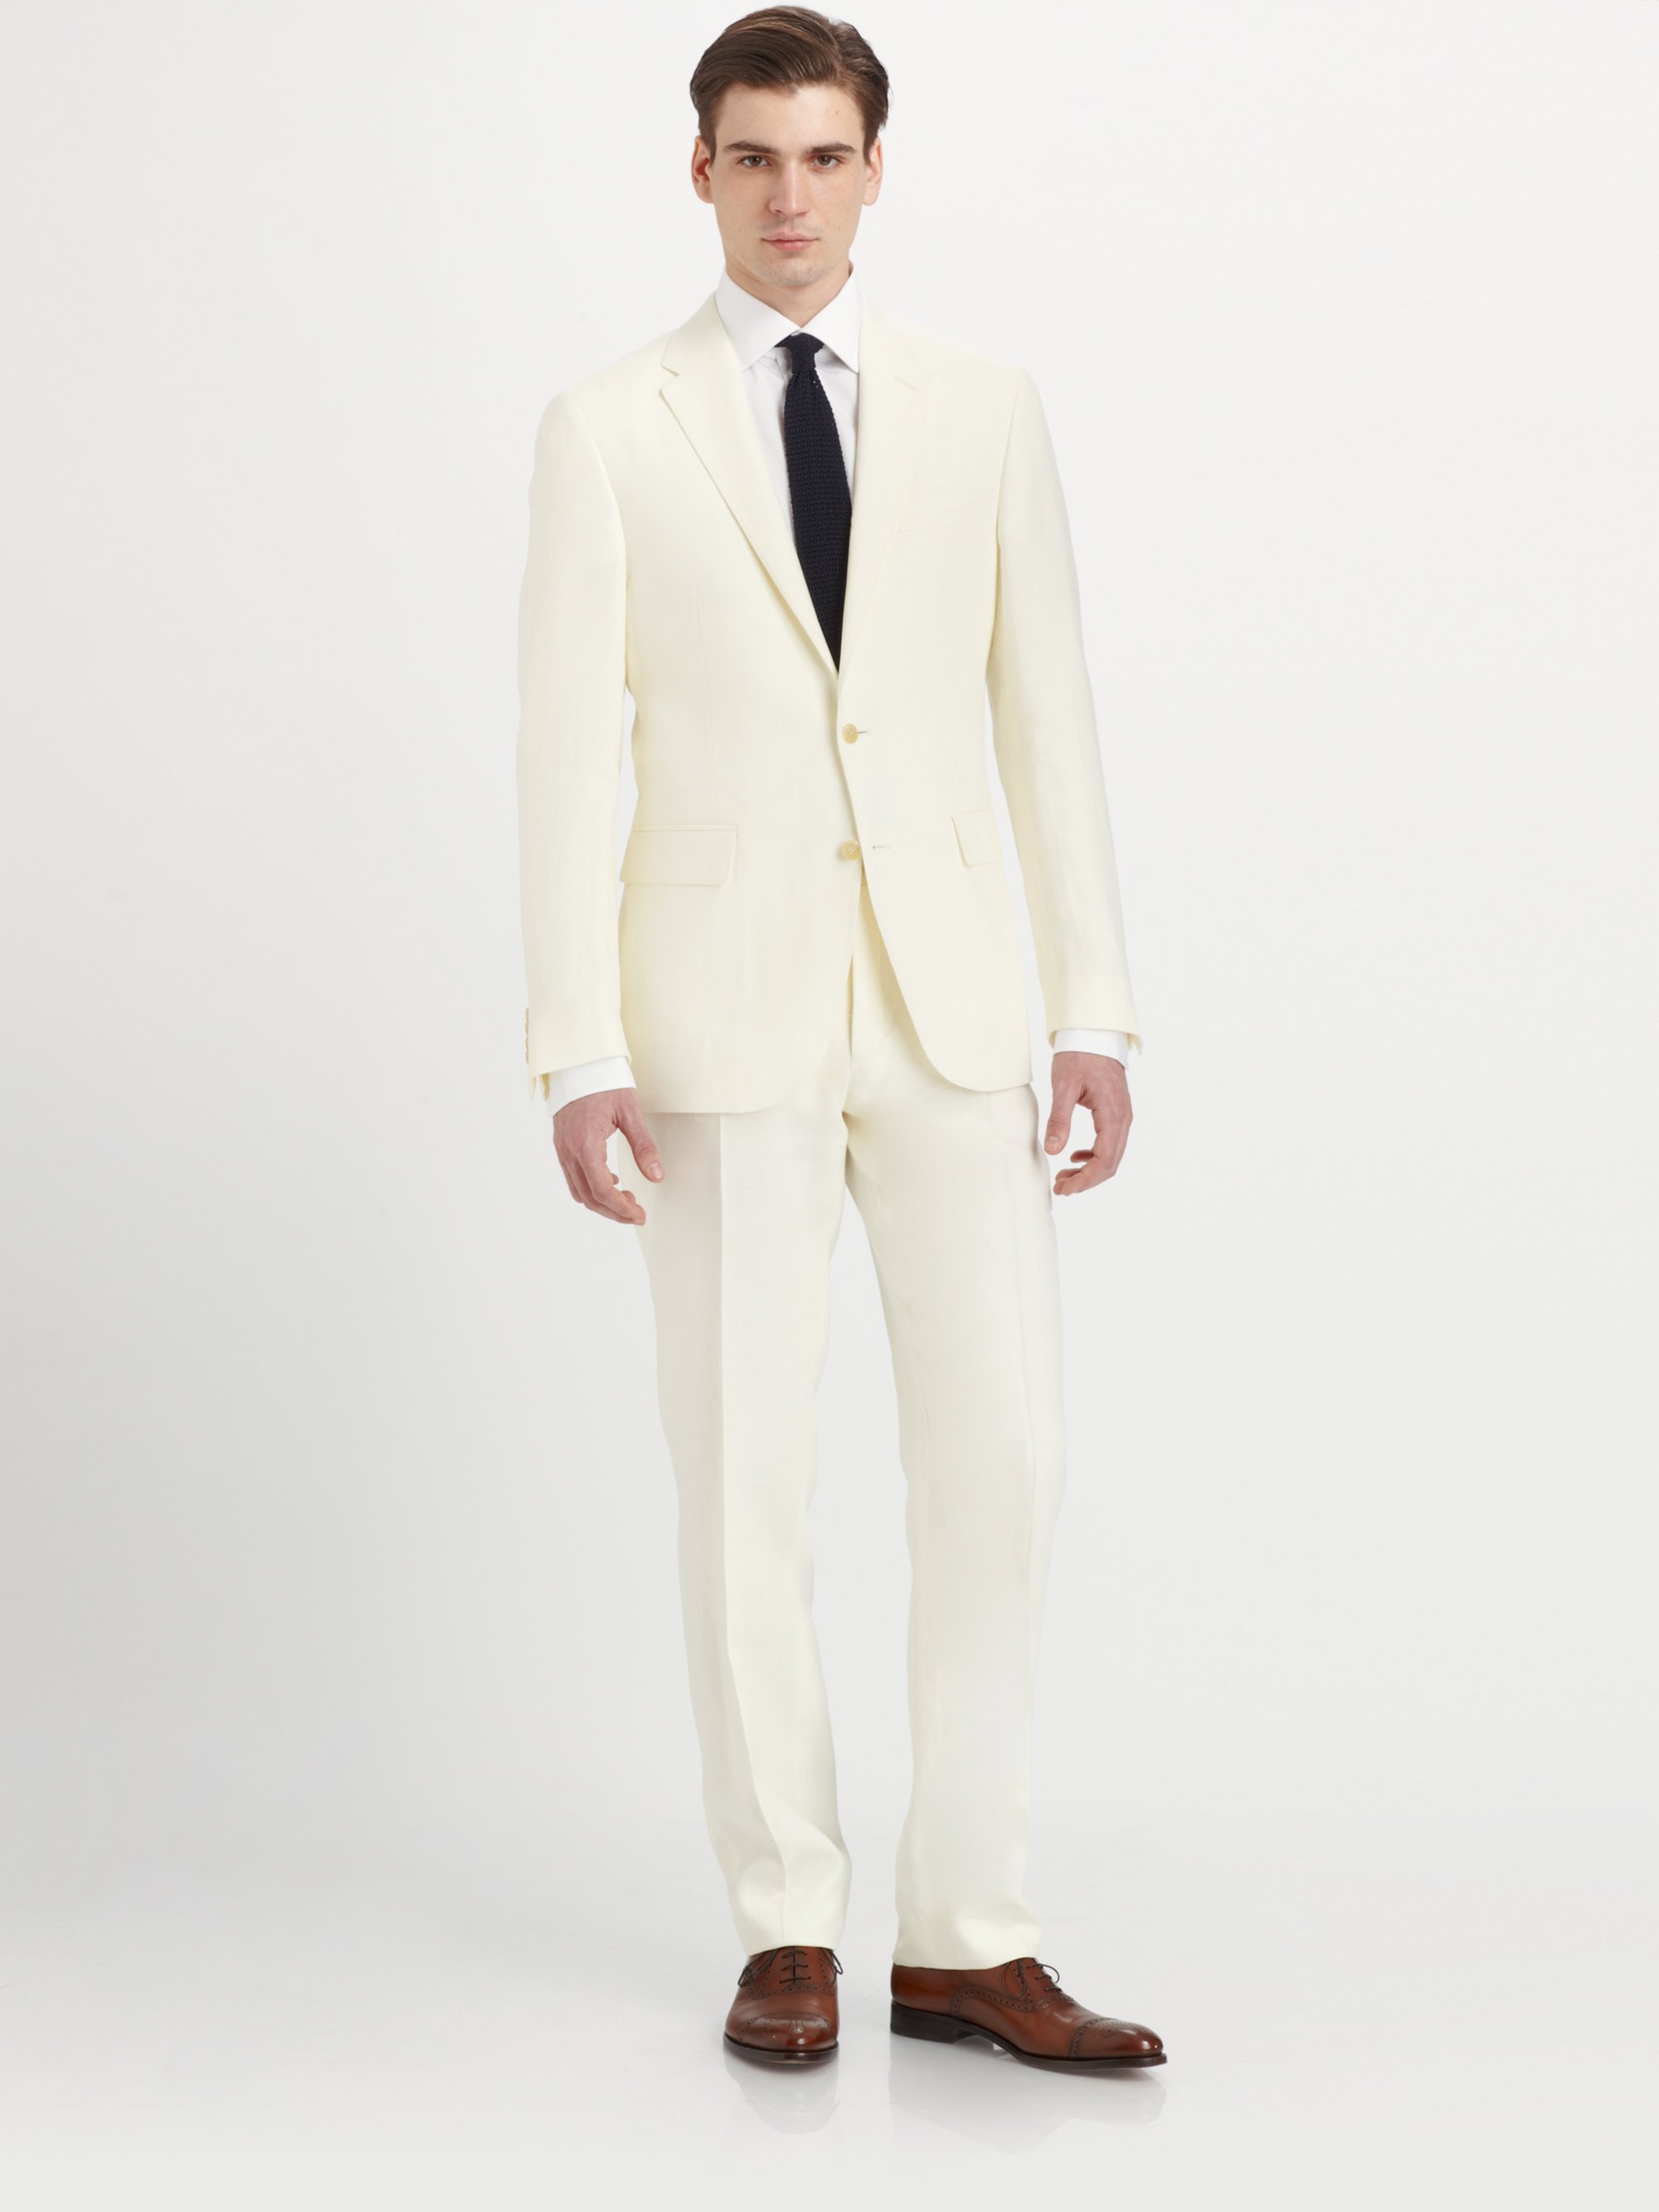 Polo Ralph Lauren Customfit Linen Suit in Natural for Men | Lyst